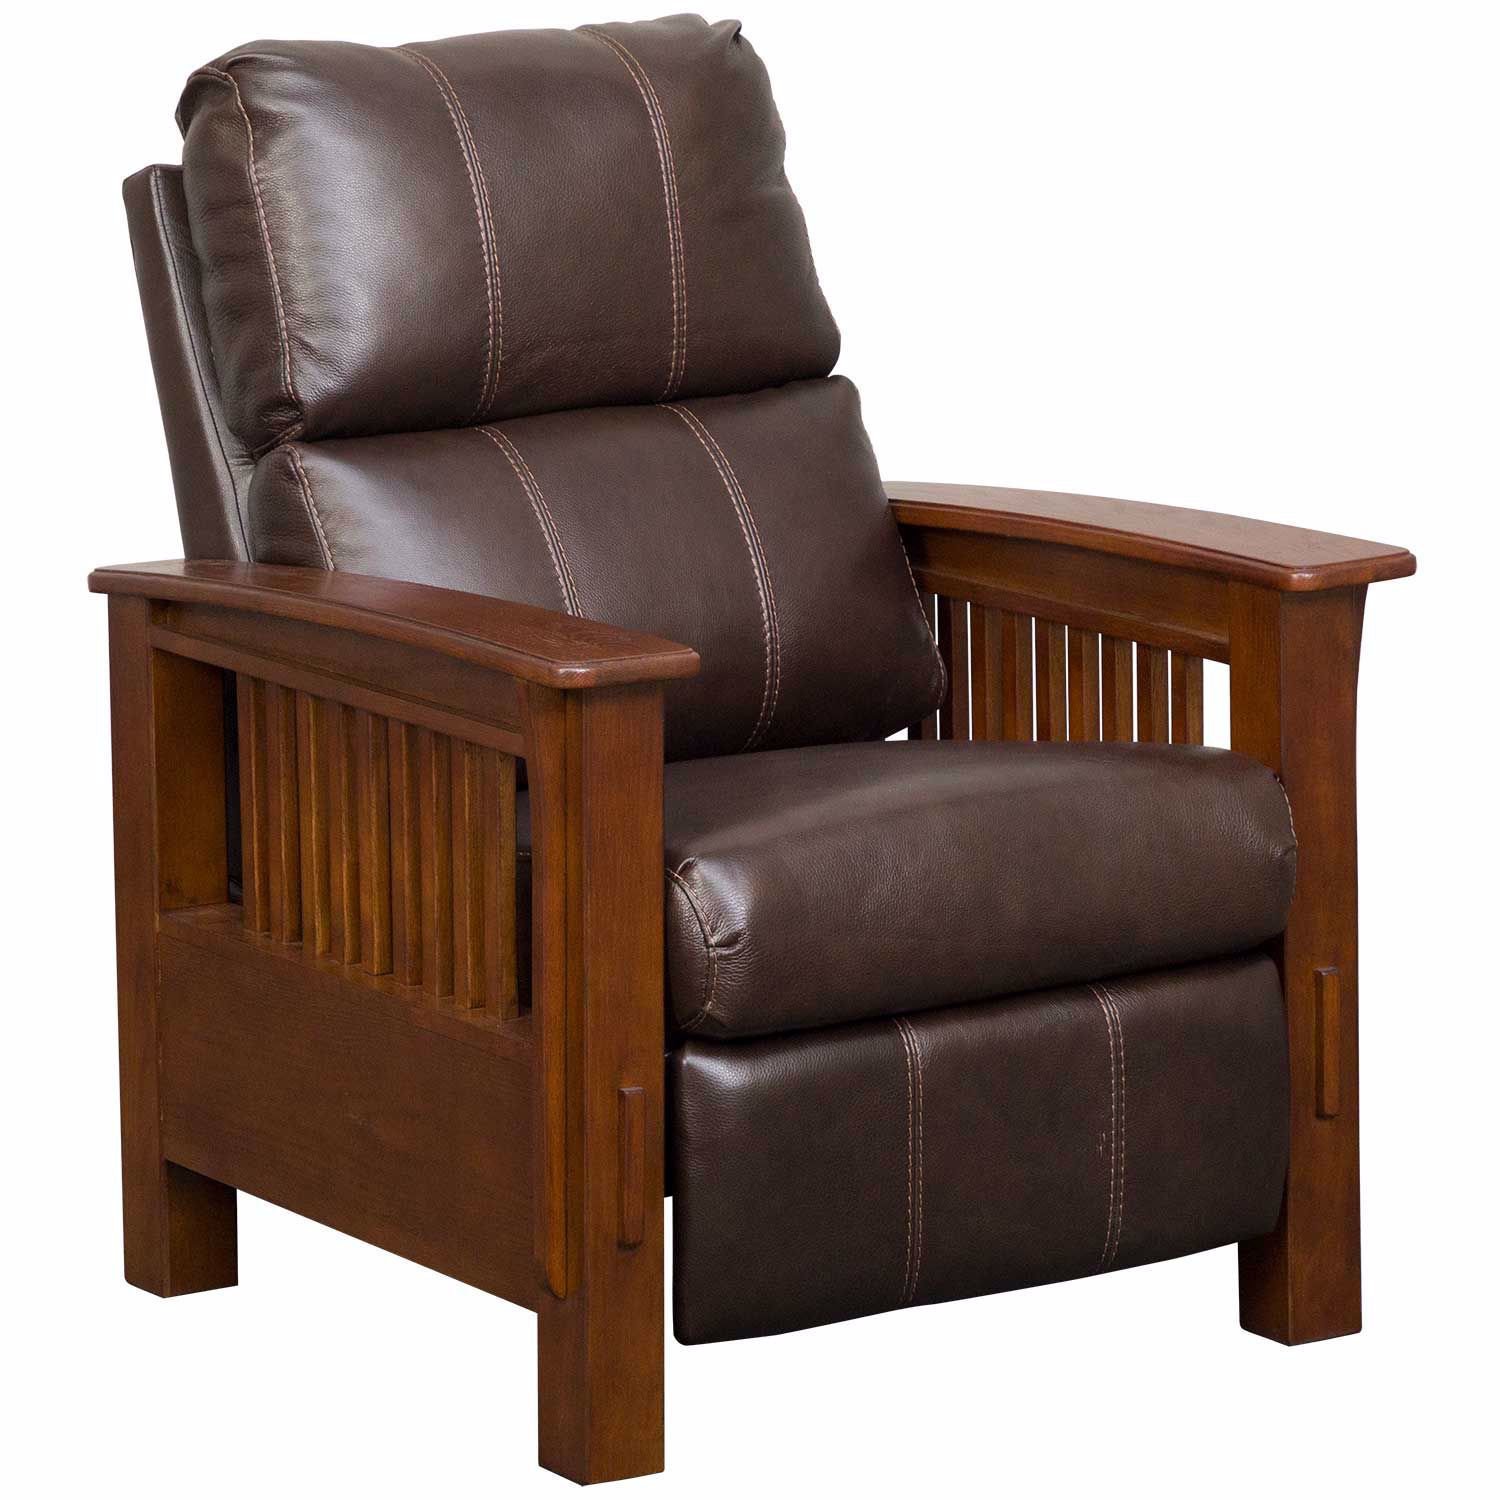 Cowlitz Leather Hi Leg Pushback Recliner 3760226 | Ashley Furniture |  AFW.com